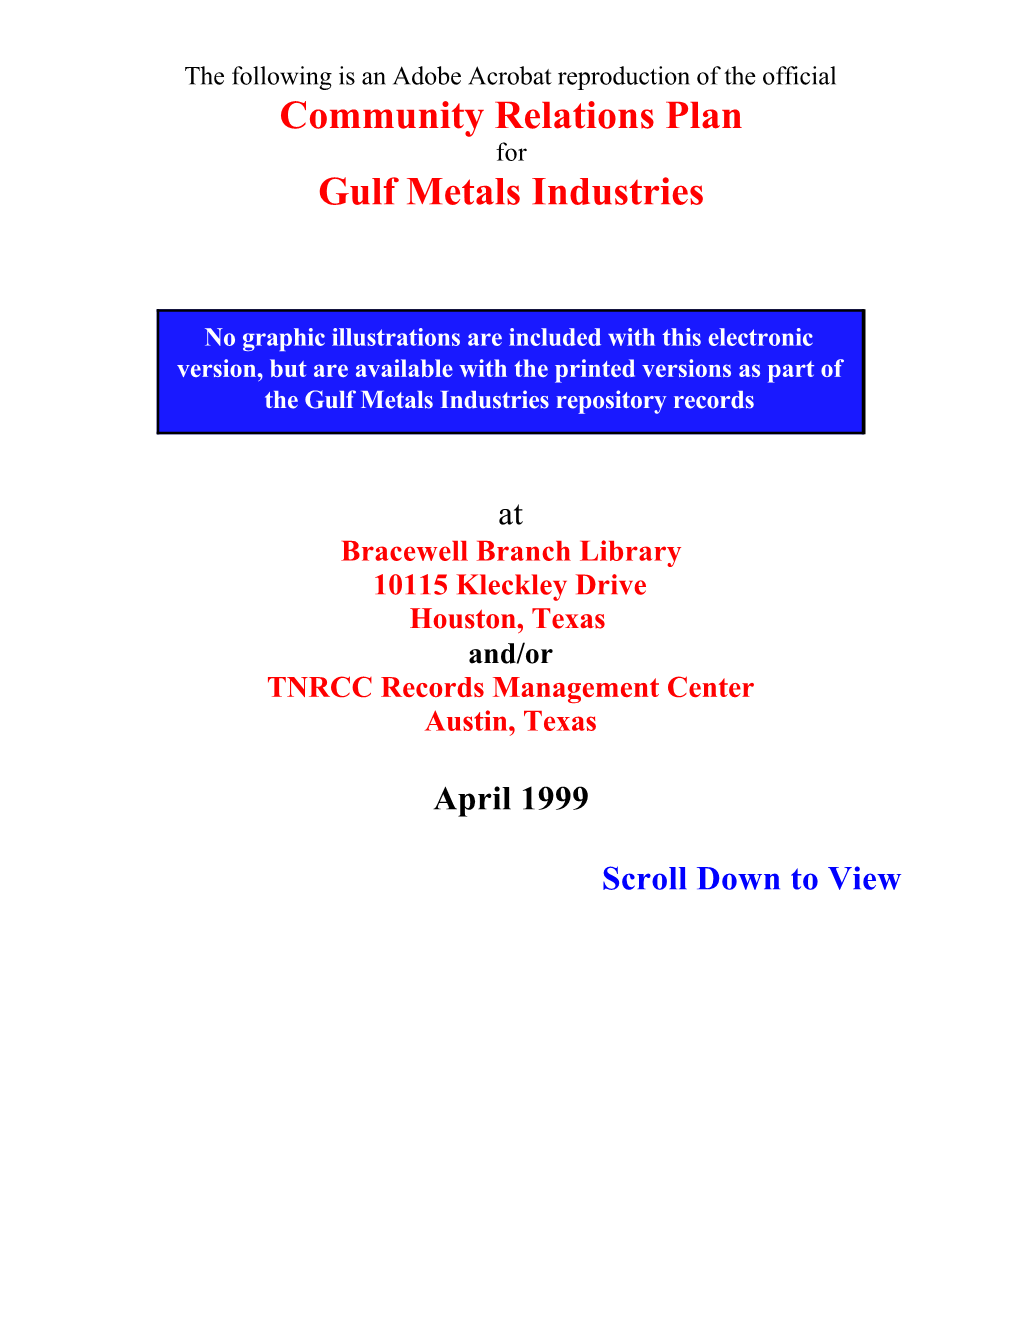 Community Relations Plan Gulf Metals Industries